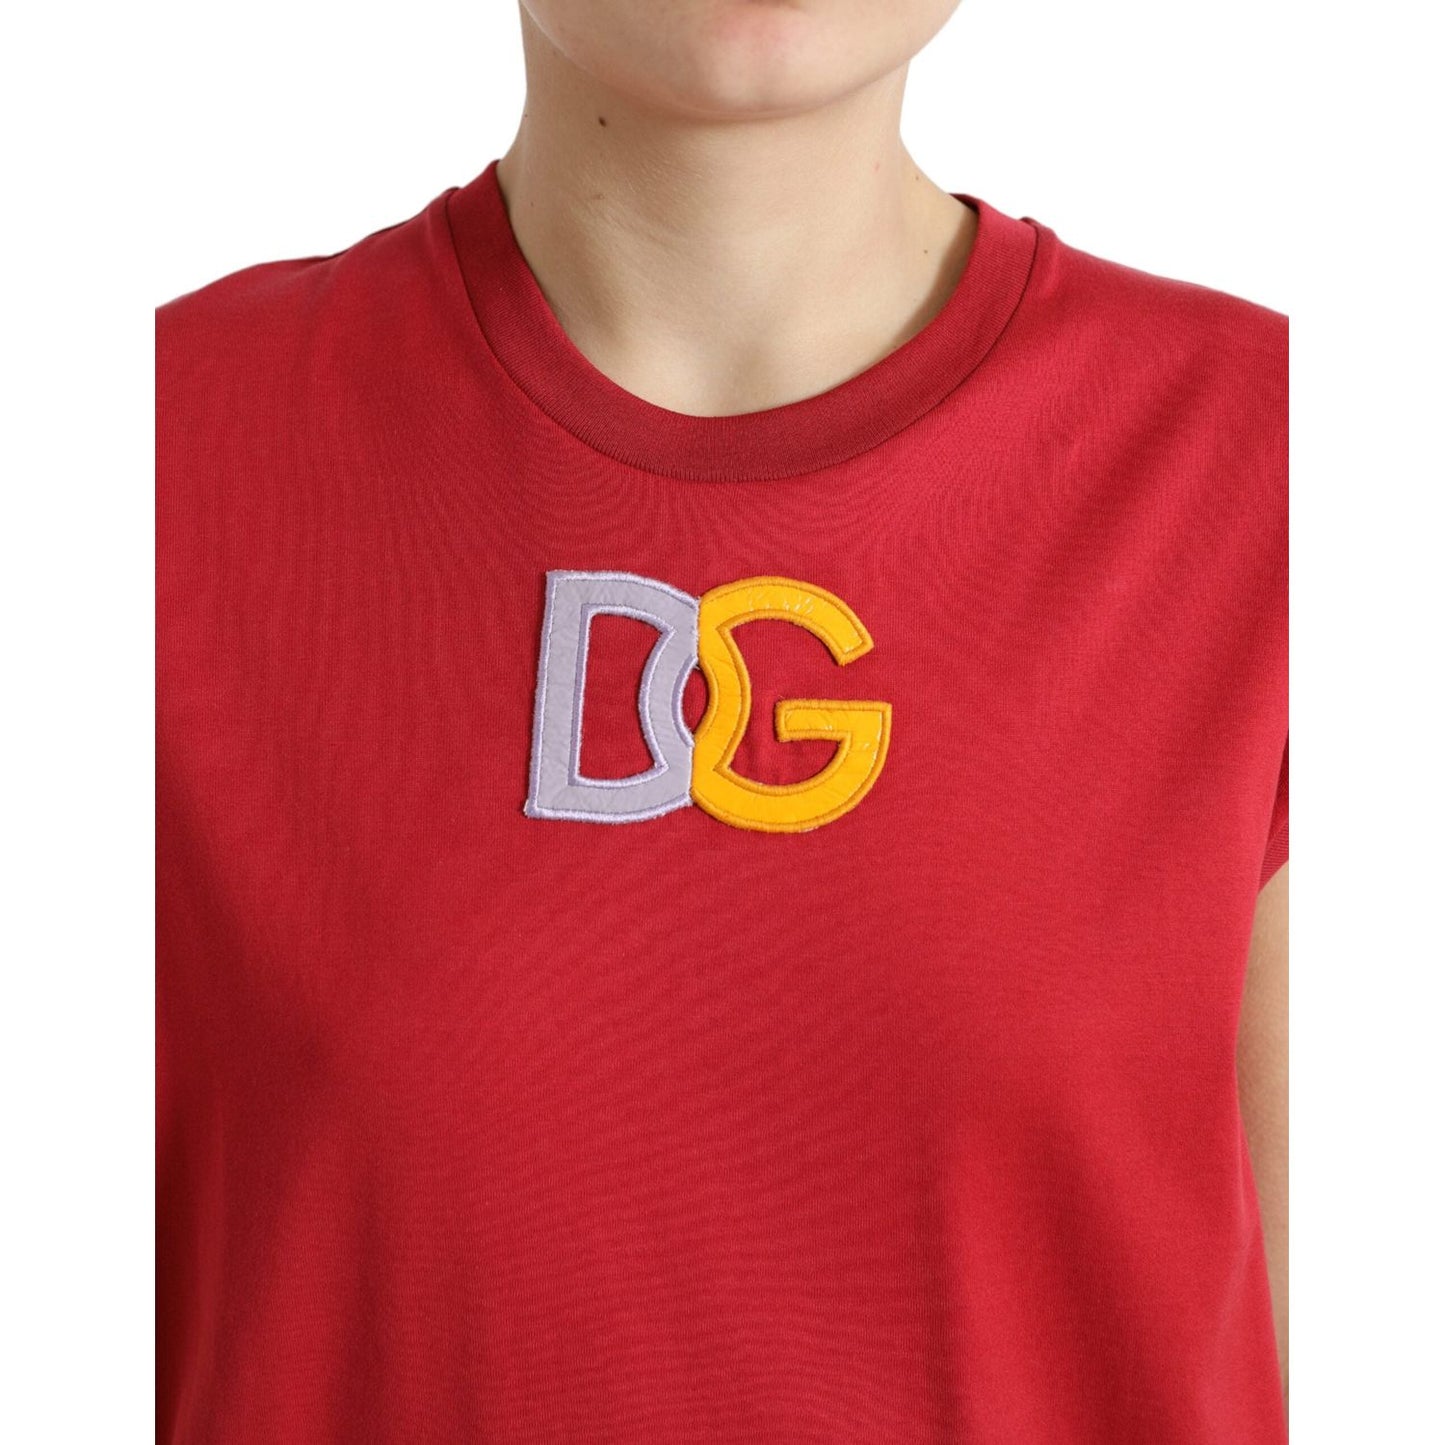 Dolce & Gabbana Elegant Red Cotton Crew Neck Tank Top red-cotton-dg-logo-crew-neck-tank-top-t-shirt 465A0925-BG-1-scaled-751fc516-08c.jpg